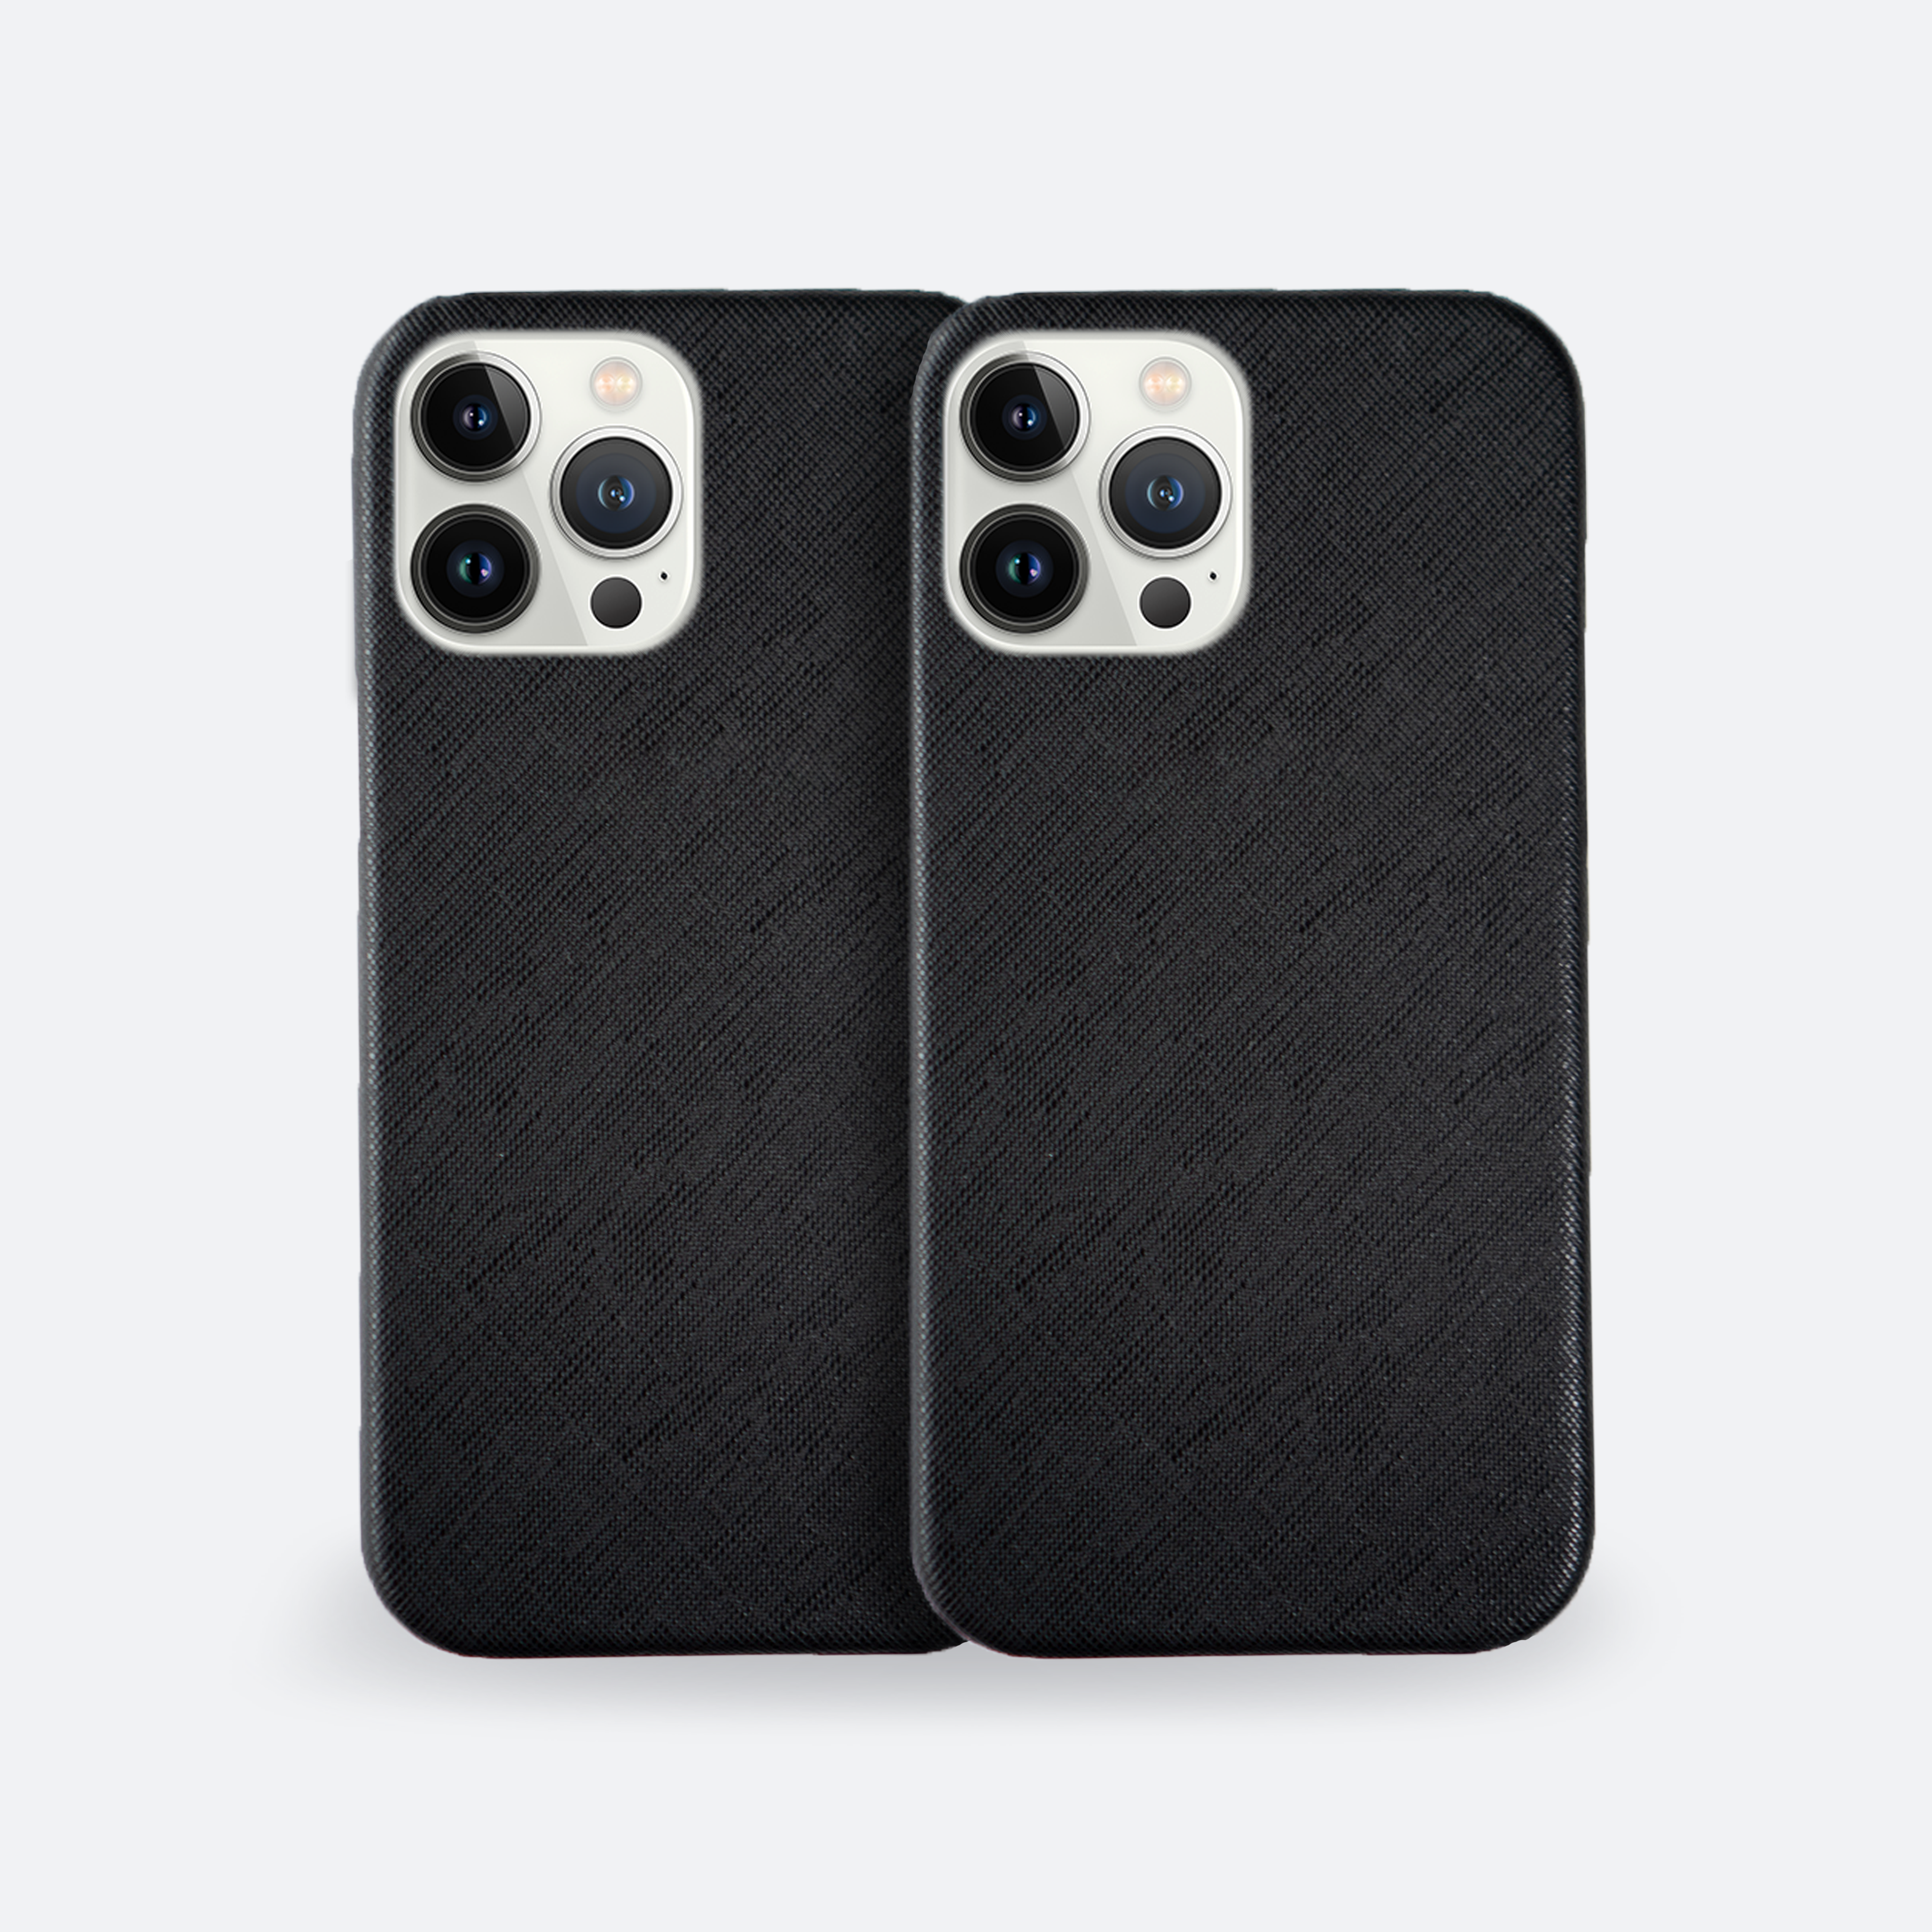 Twin iPhone Set in Black - Kastemize